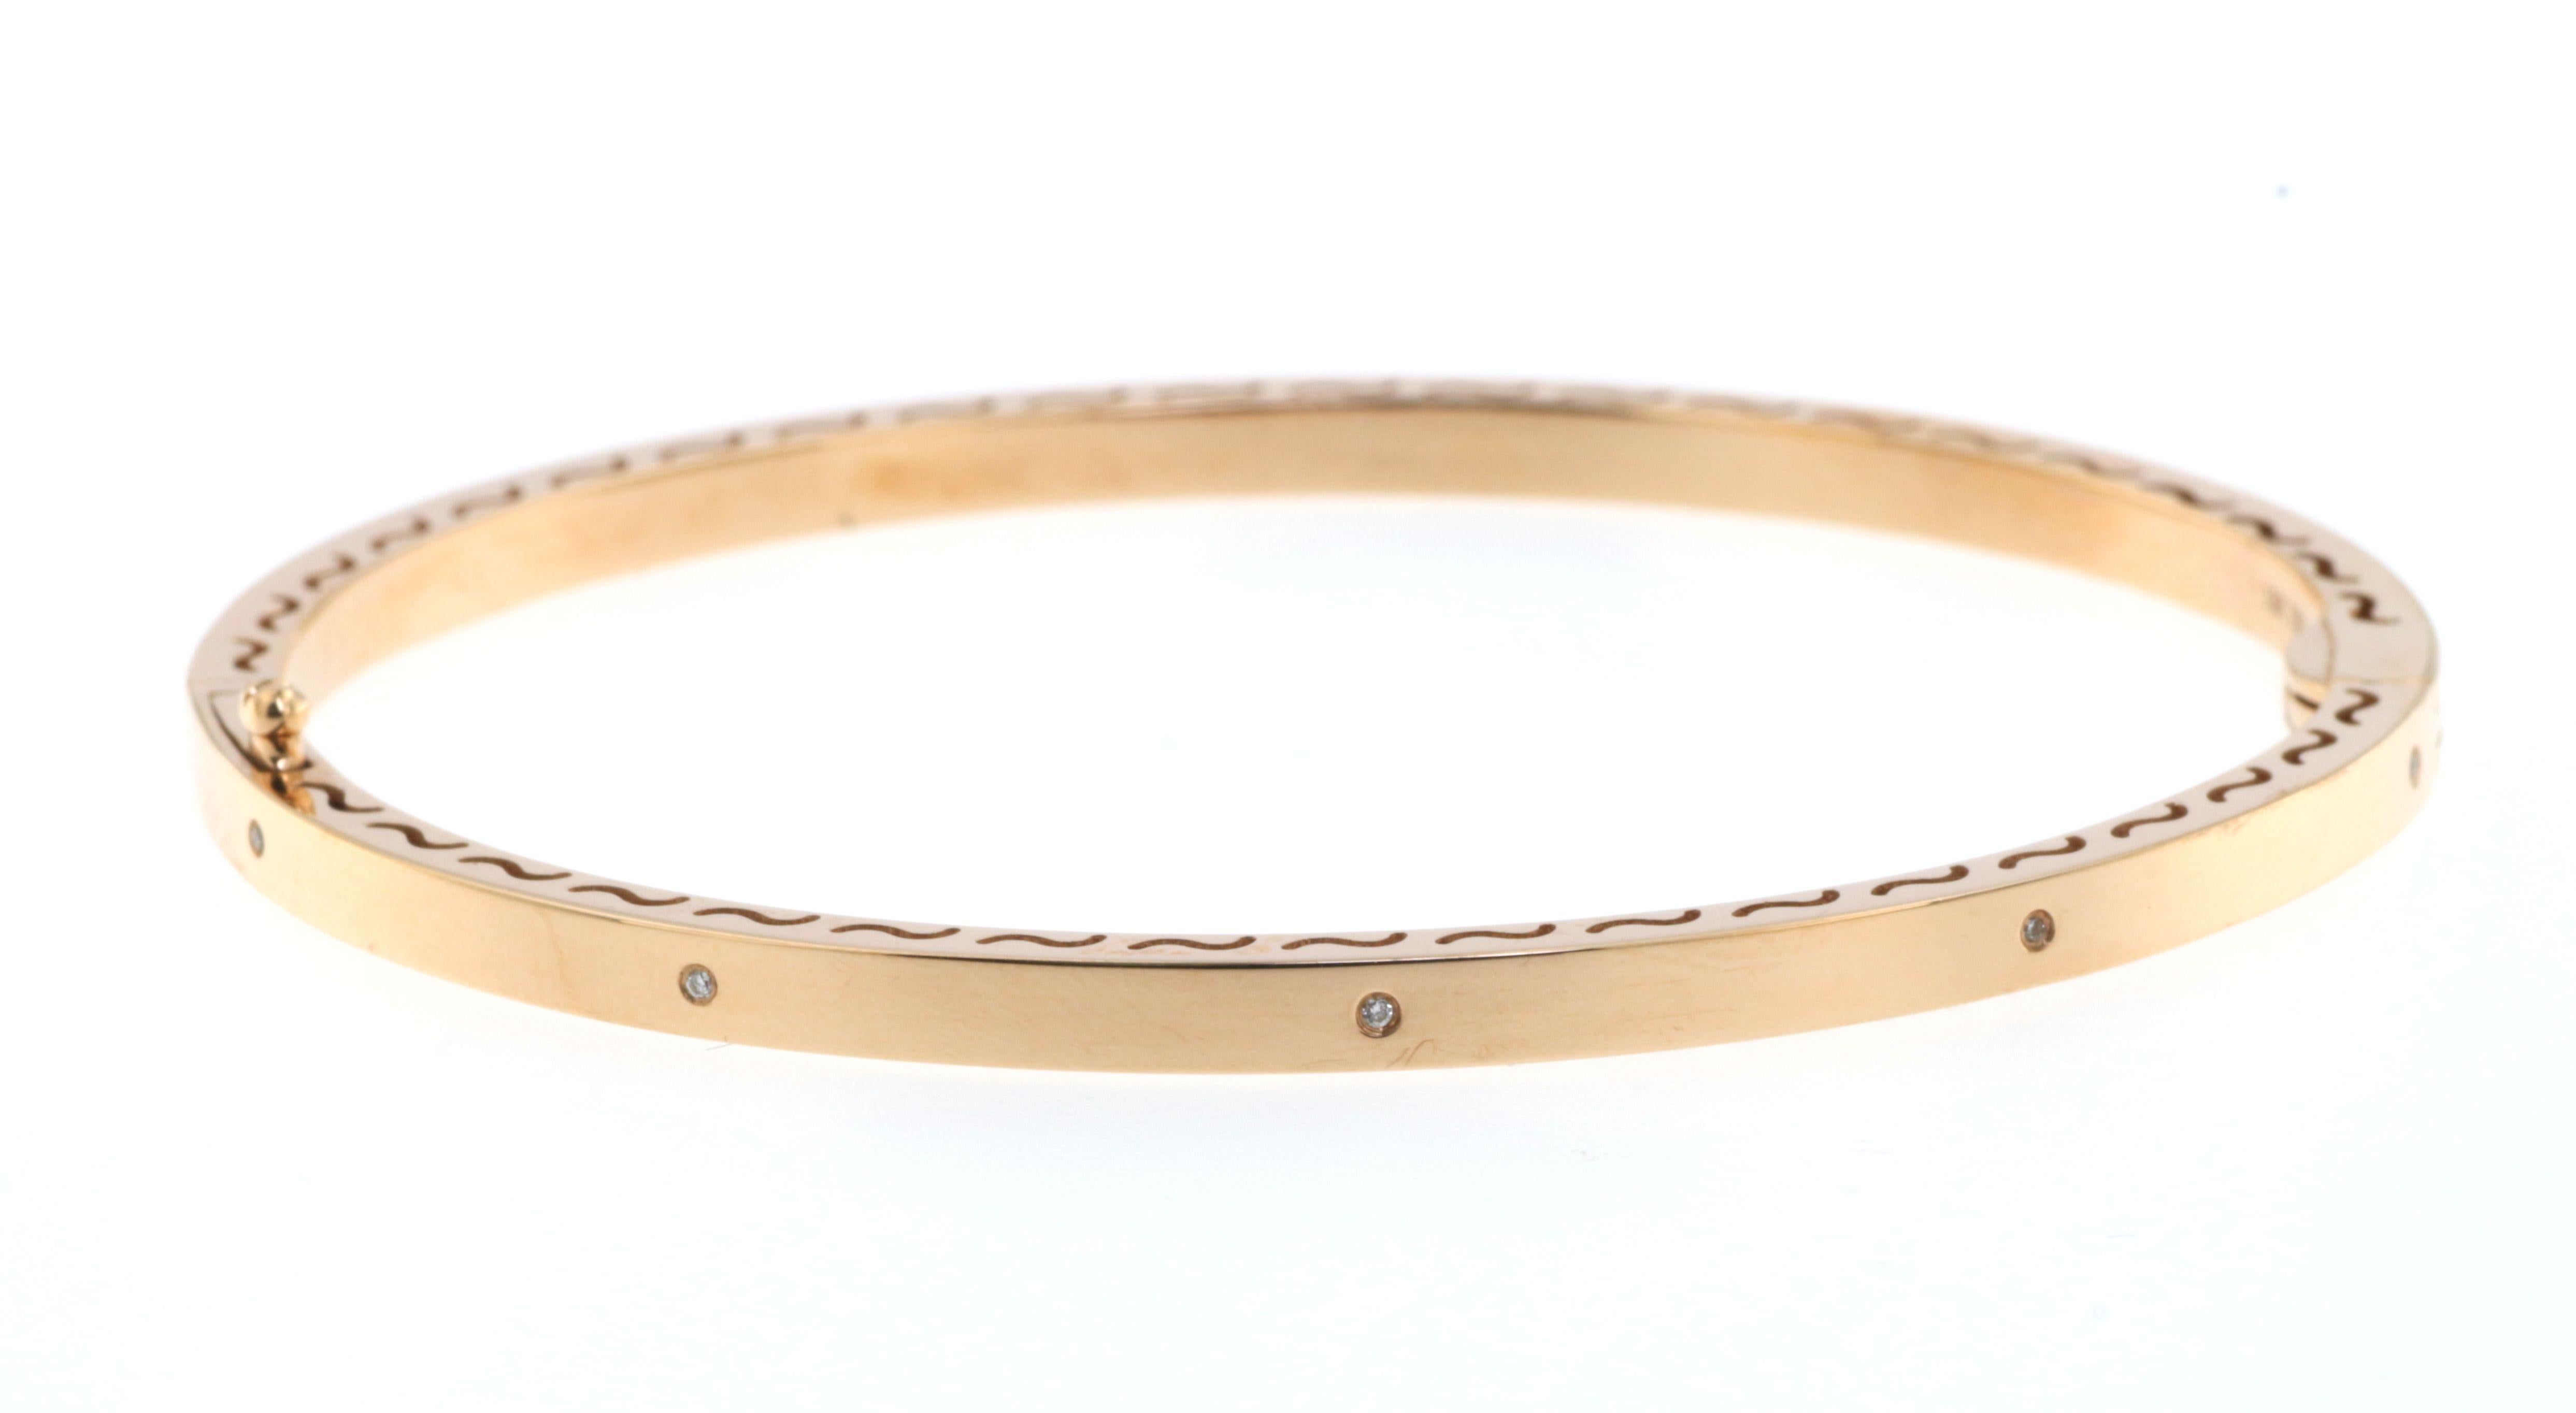 Brilliant Cut 0.55 Carat Diamond Bracelet in 18K Rose Gold For Sale